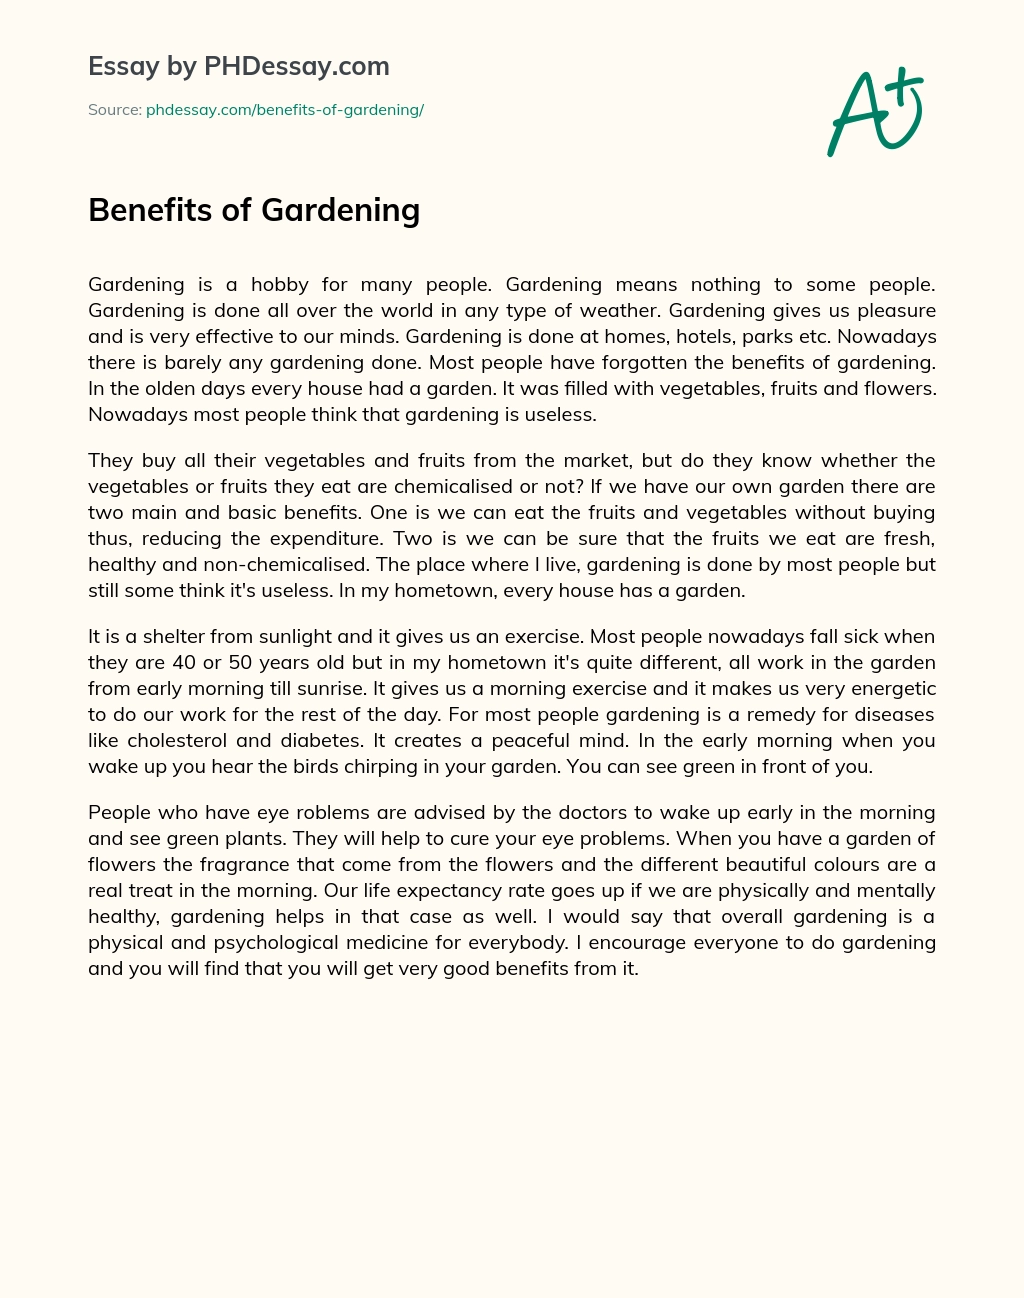 Benefits of Gardening essay